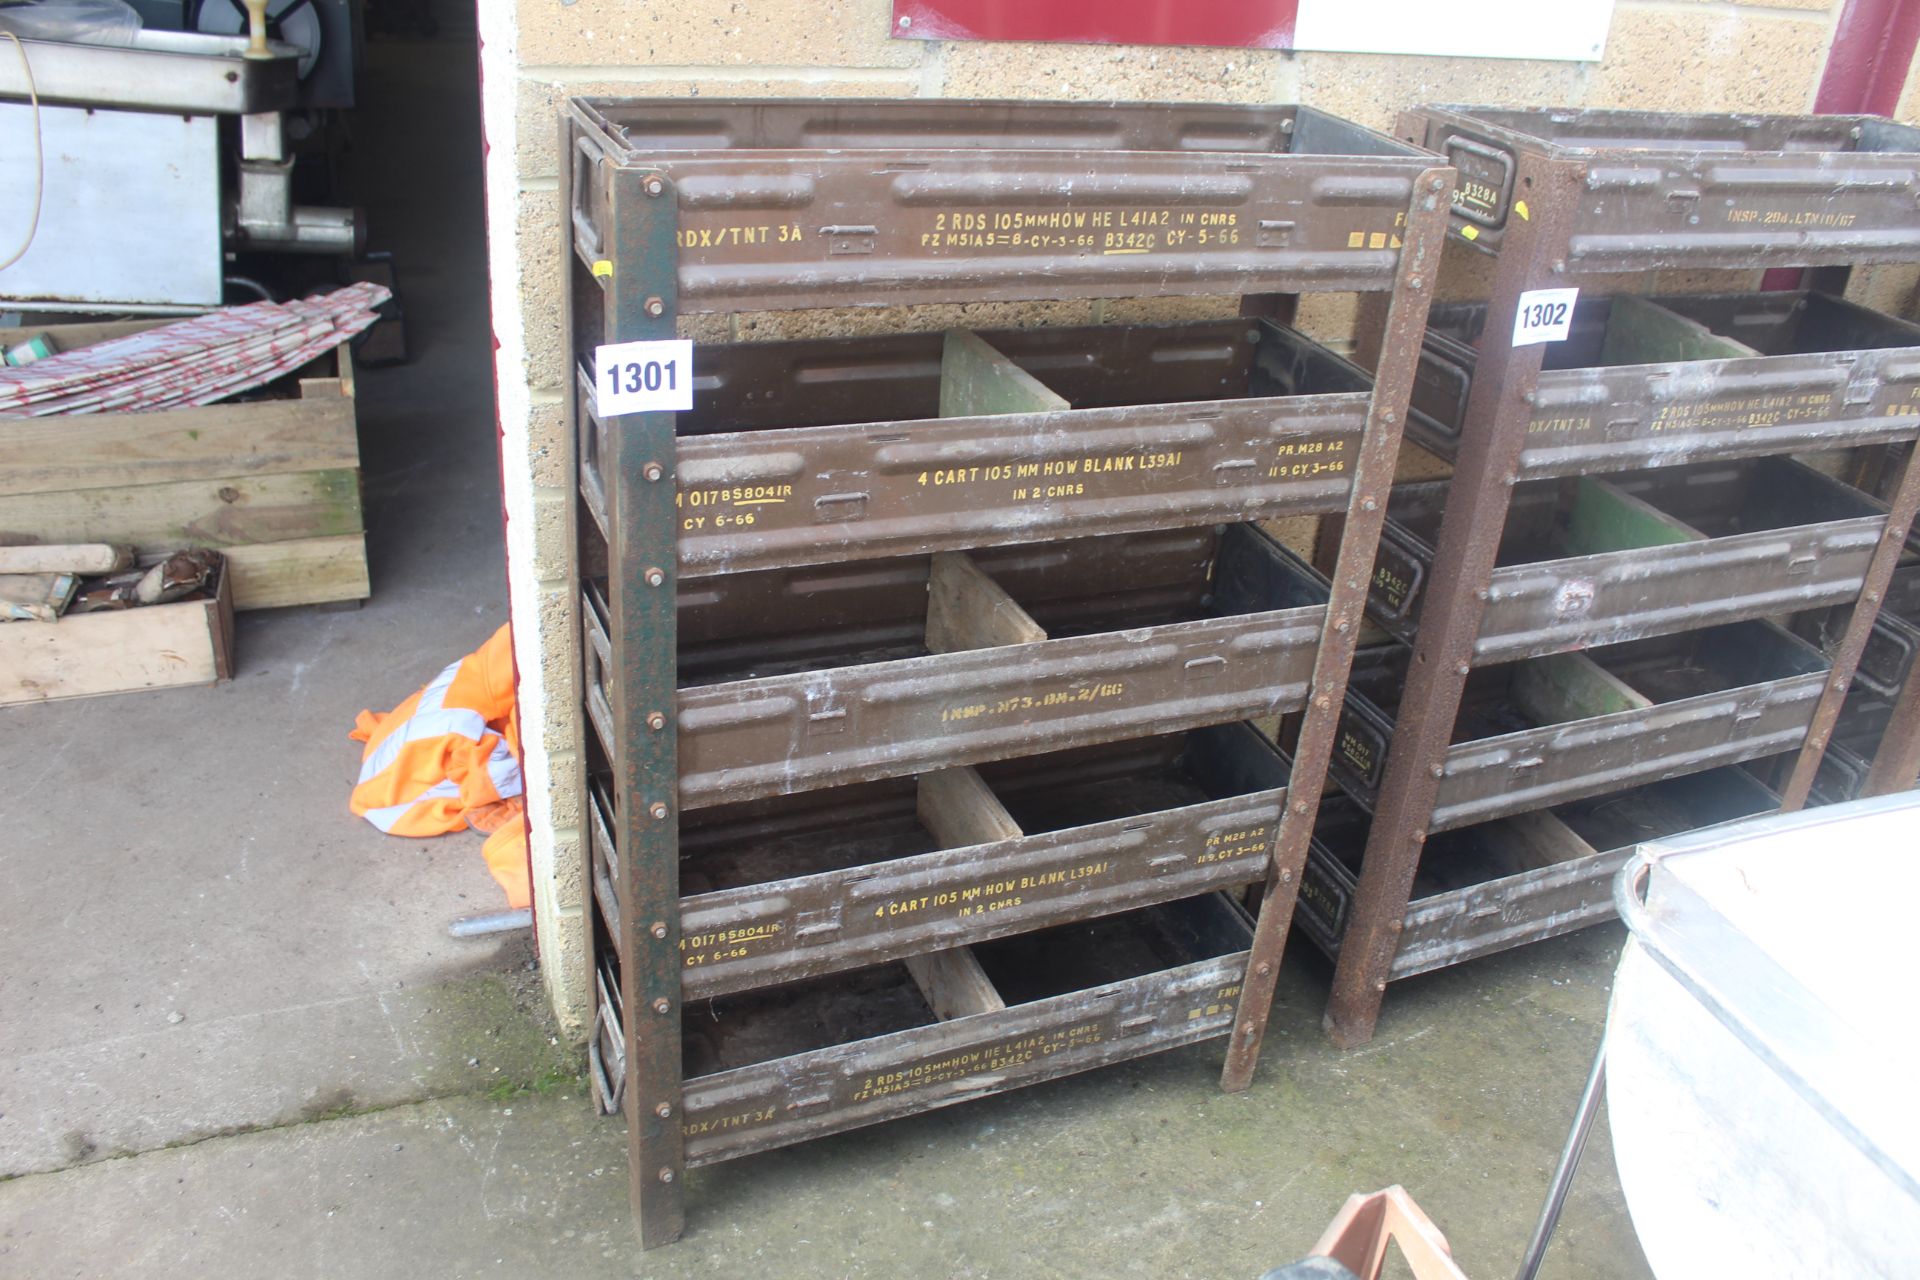 Workshop storage unit made from ammunition boxes.